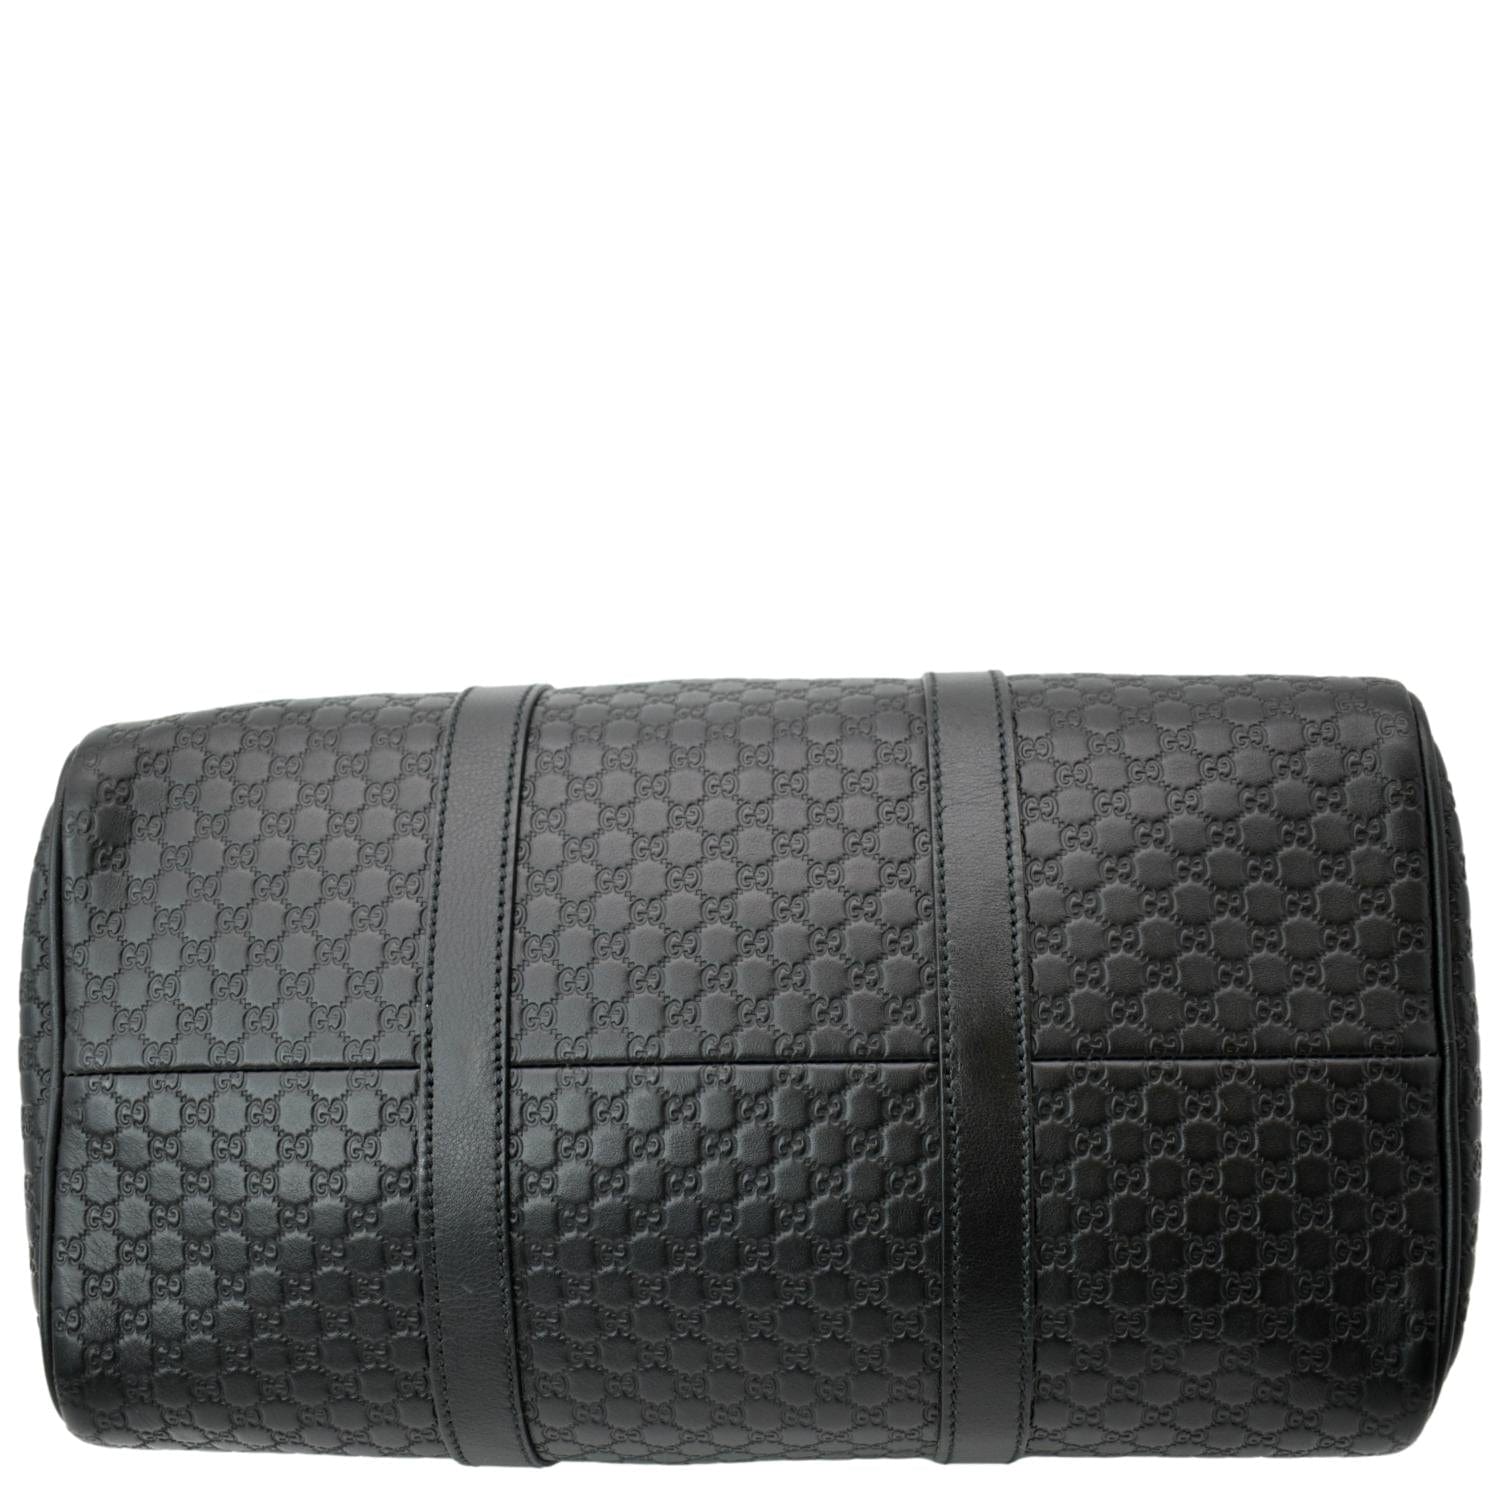 Gucci Medium Black Leather Handbag Boston Microguccissima w/Det